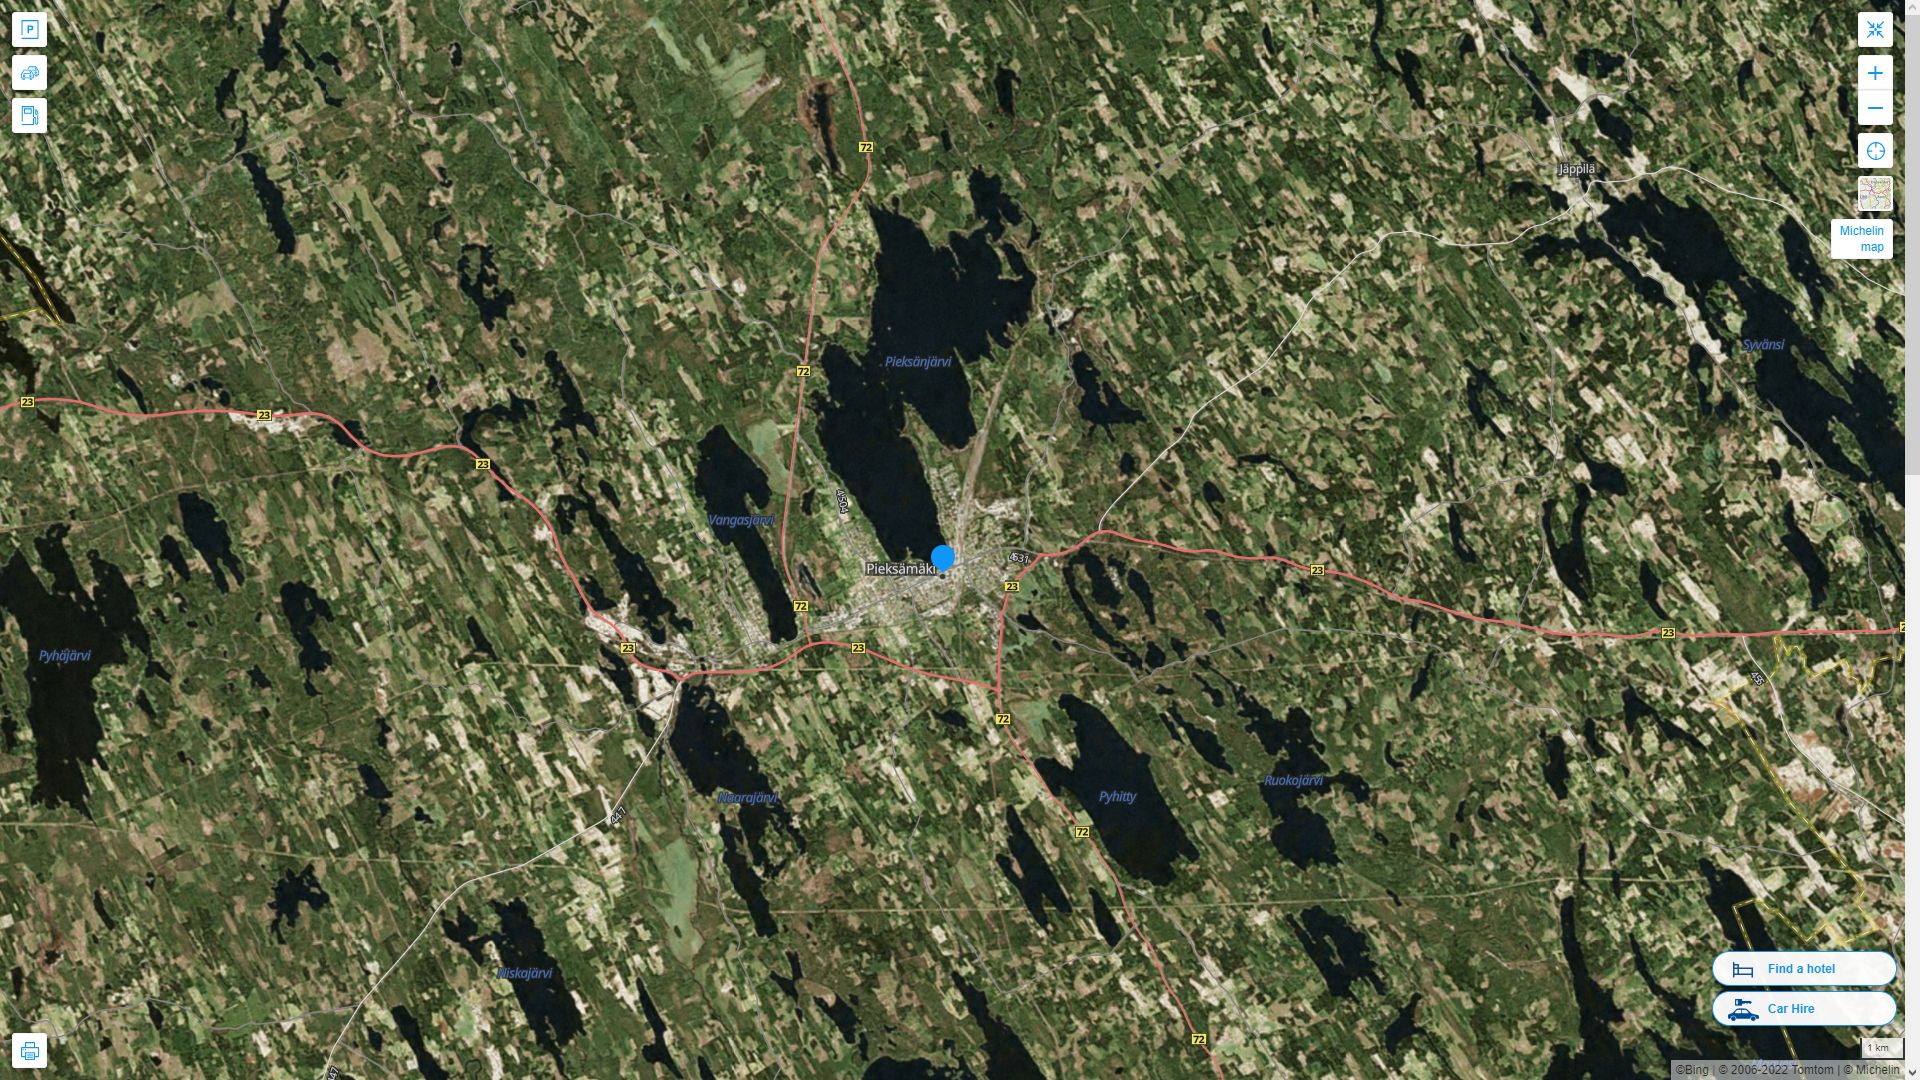 Pieksamaki Highway and Road Map with Satellite View